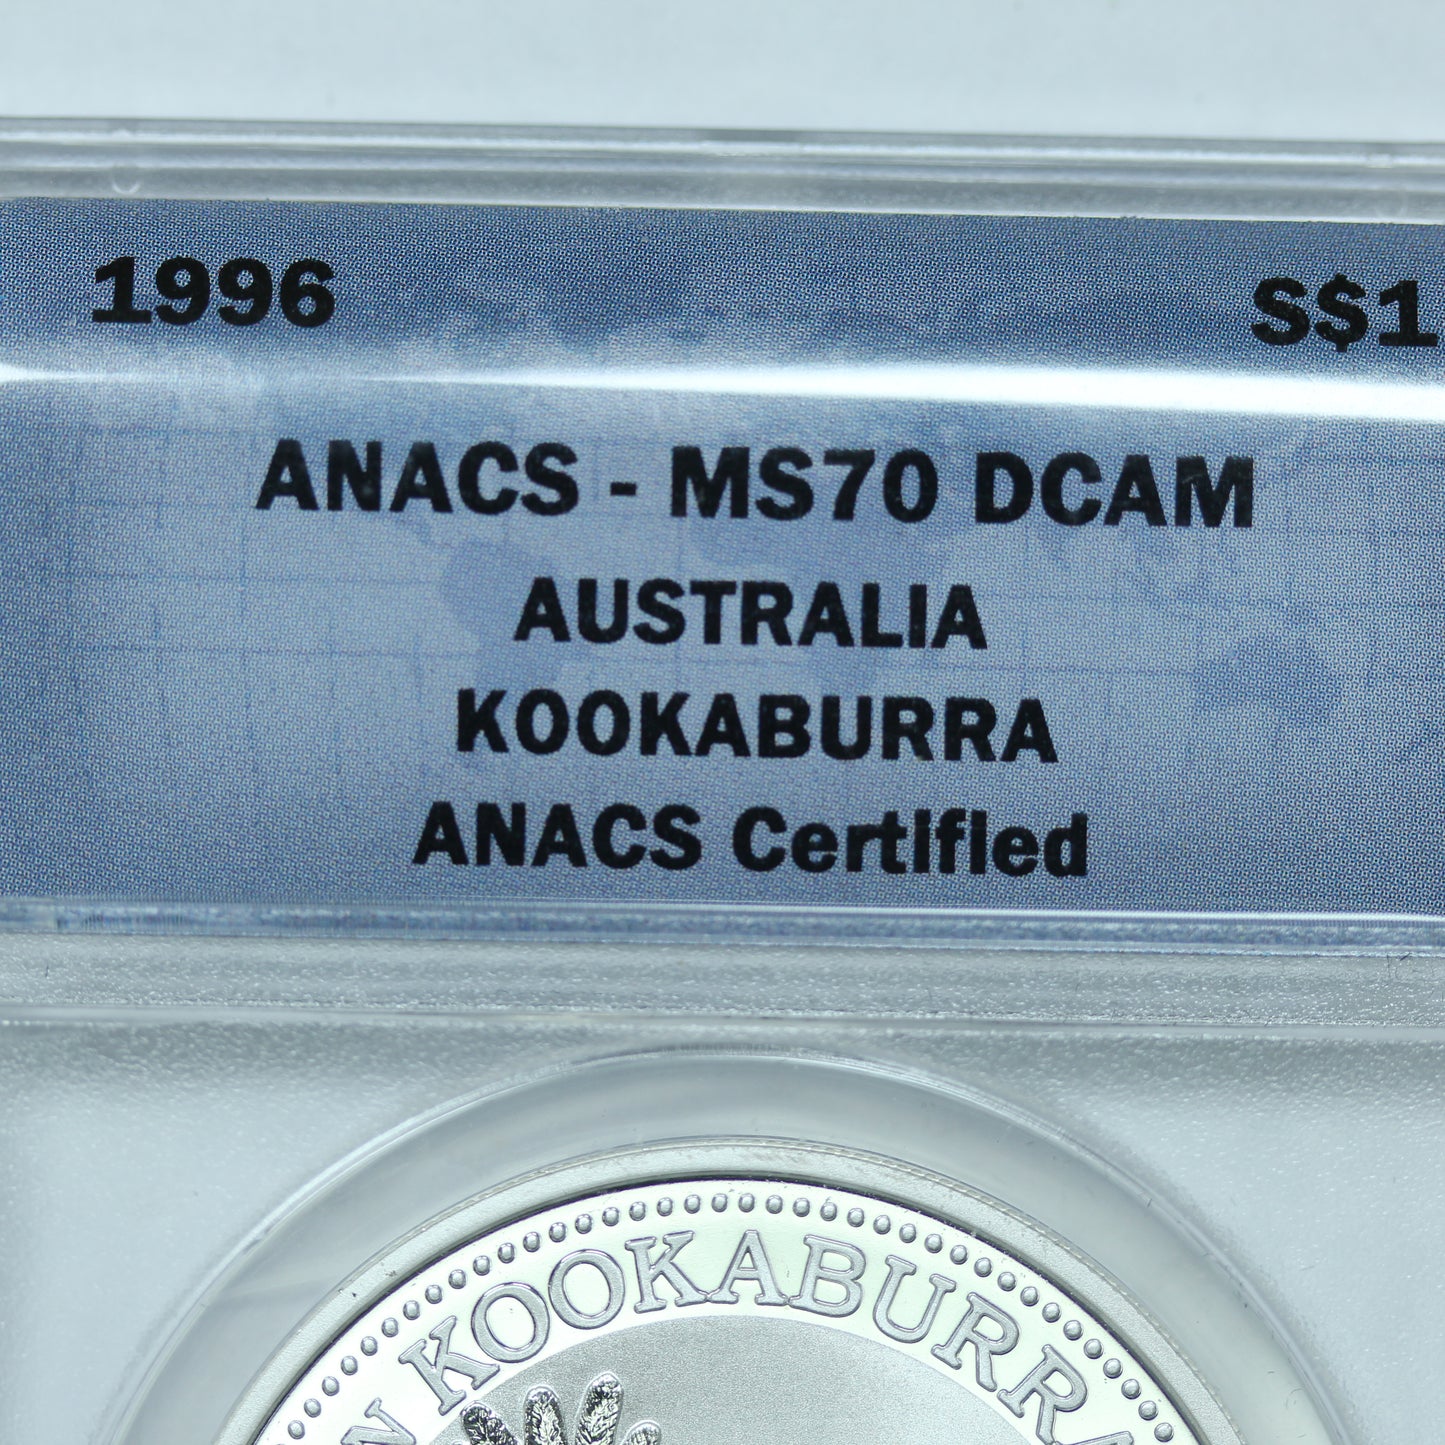 1996 $1 Australia Kookaburra 1 oz Silver - ANACS MS70 DCAM Deep Cameo